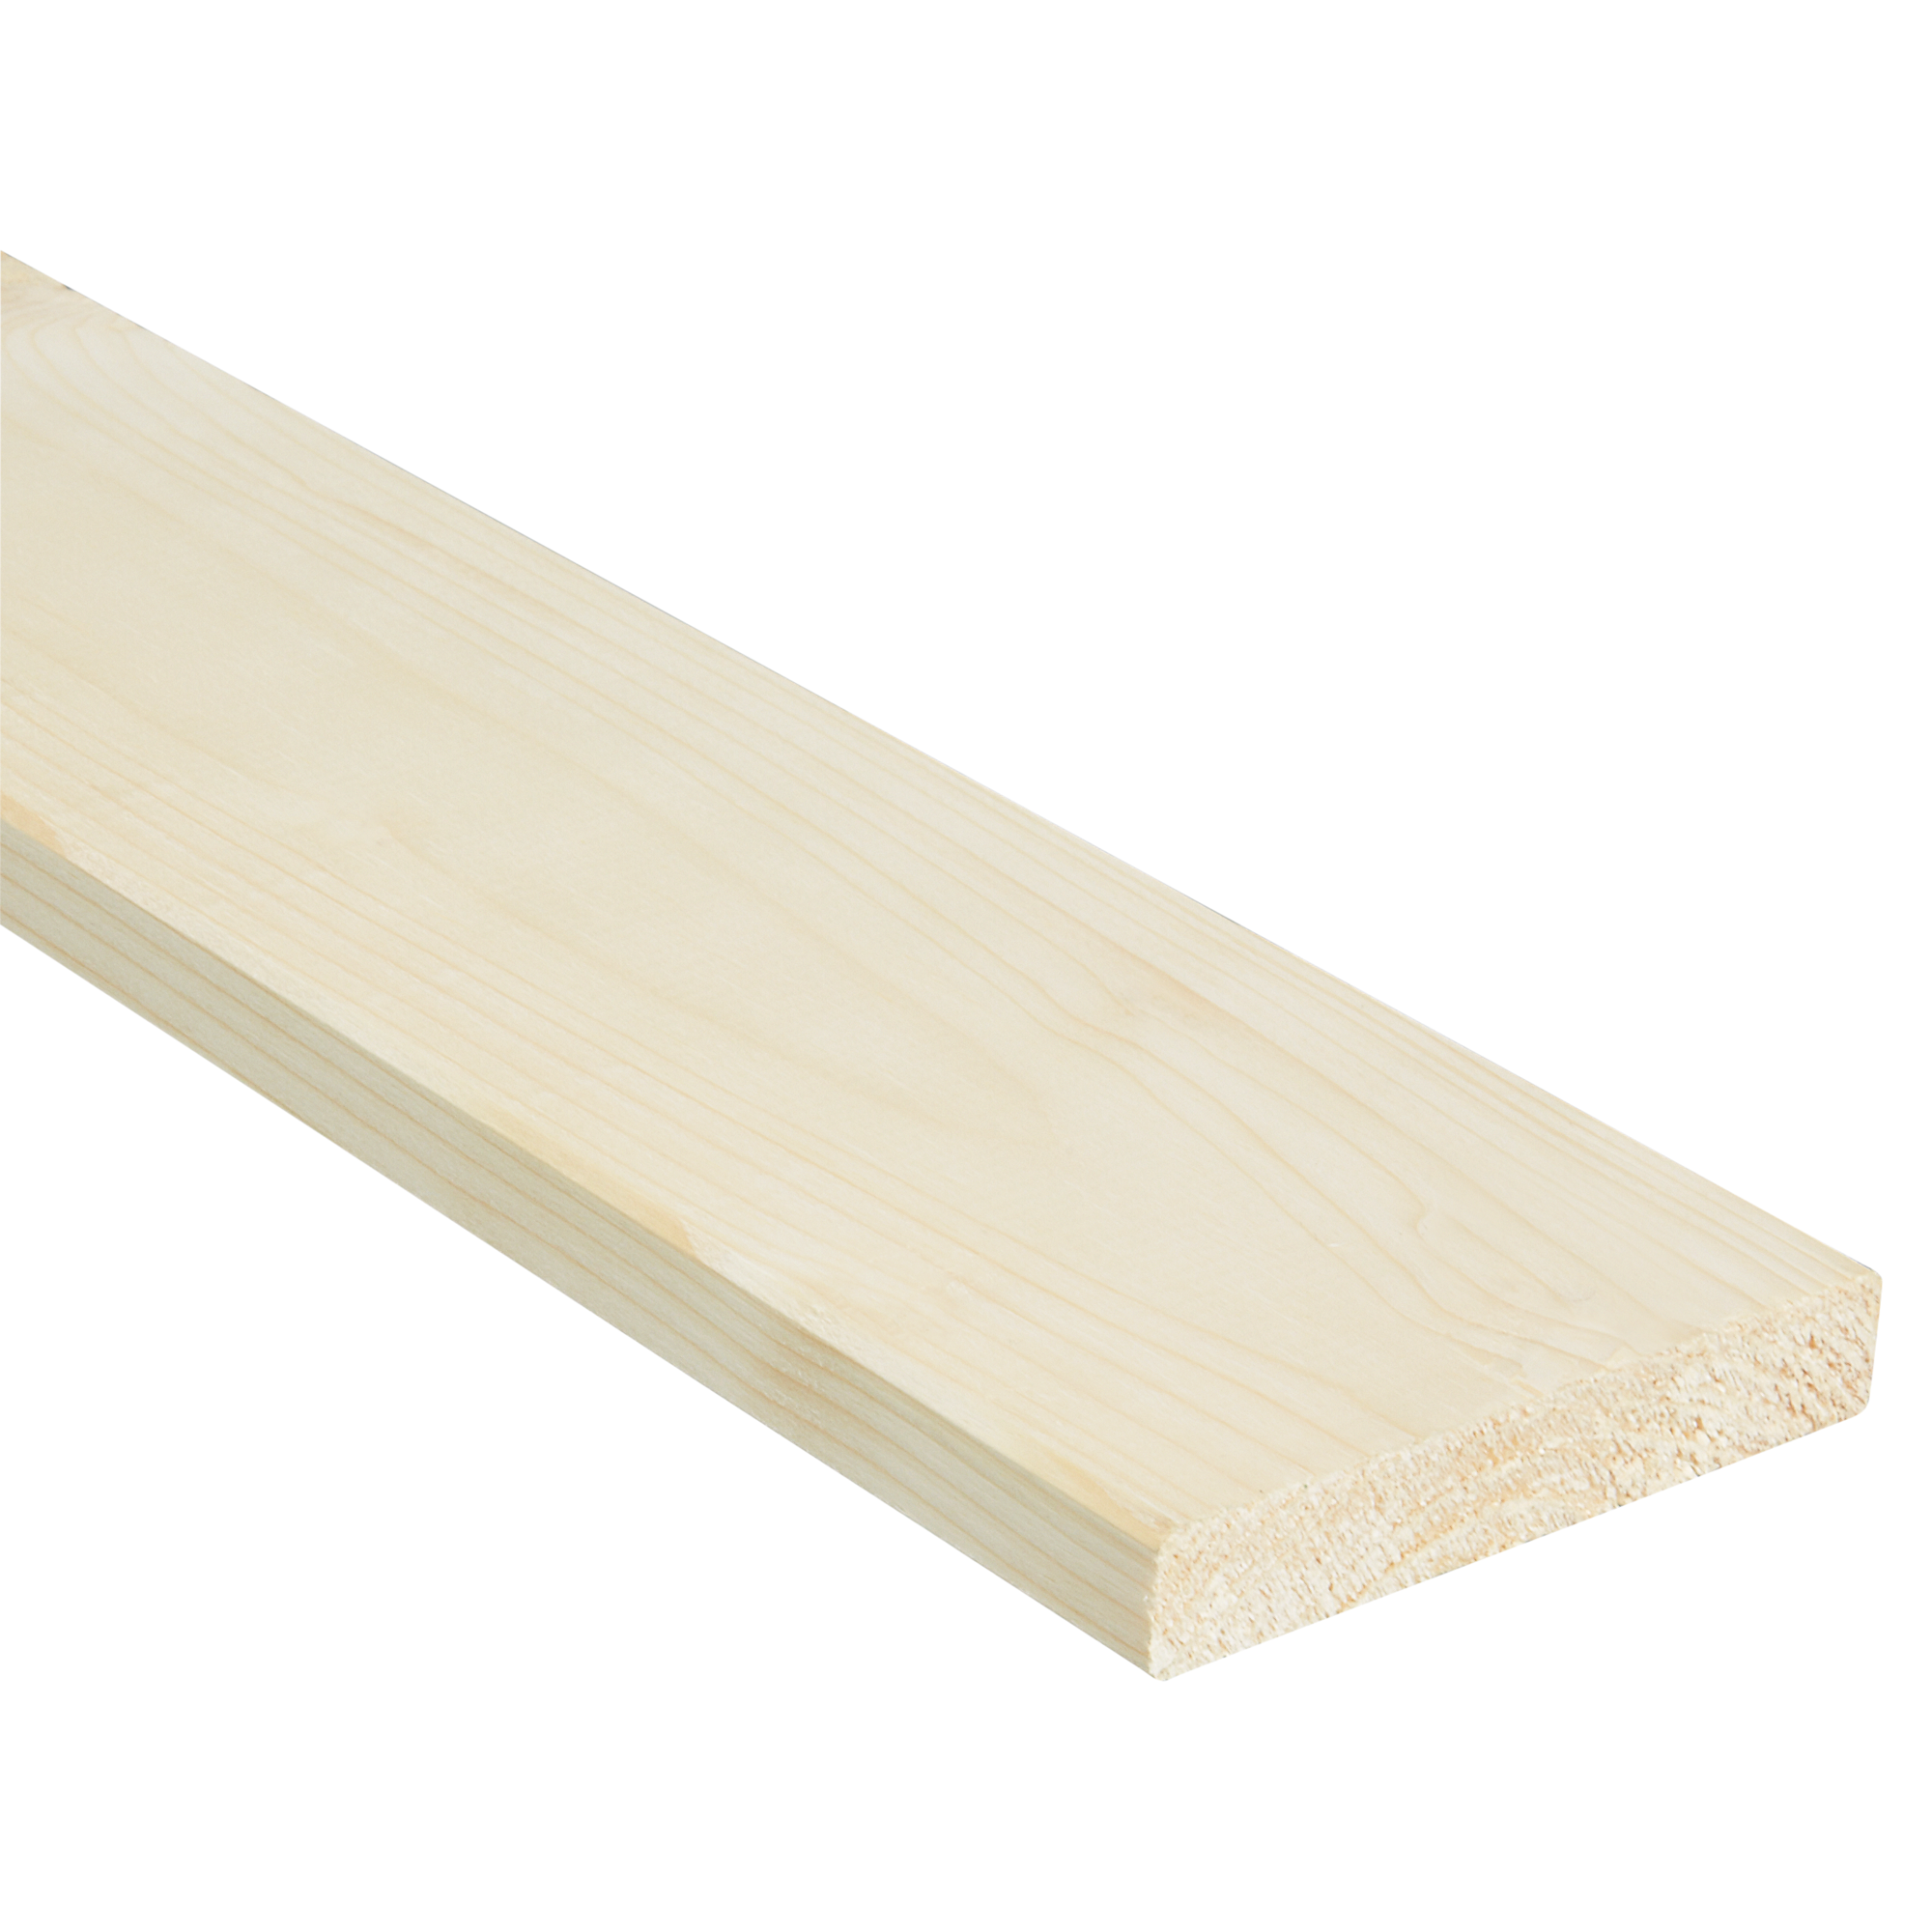 binderholz Glattkantbrett Fichte / Tanne gehobelt 18 x 60 x 2000 mm